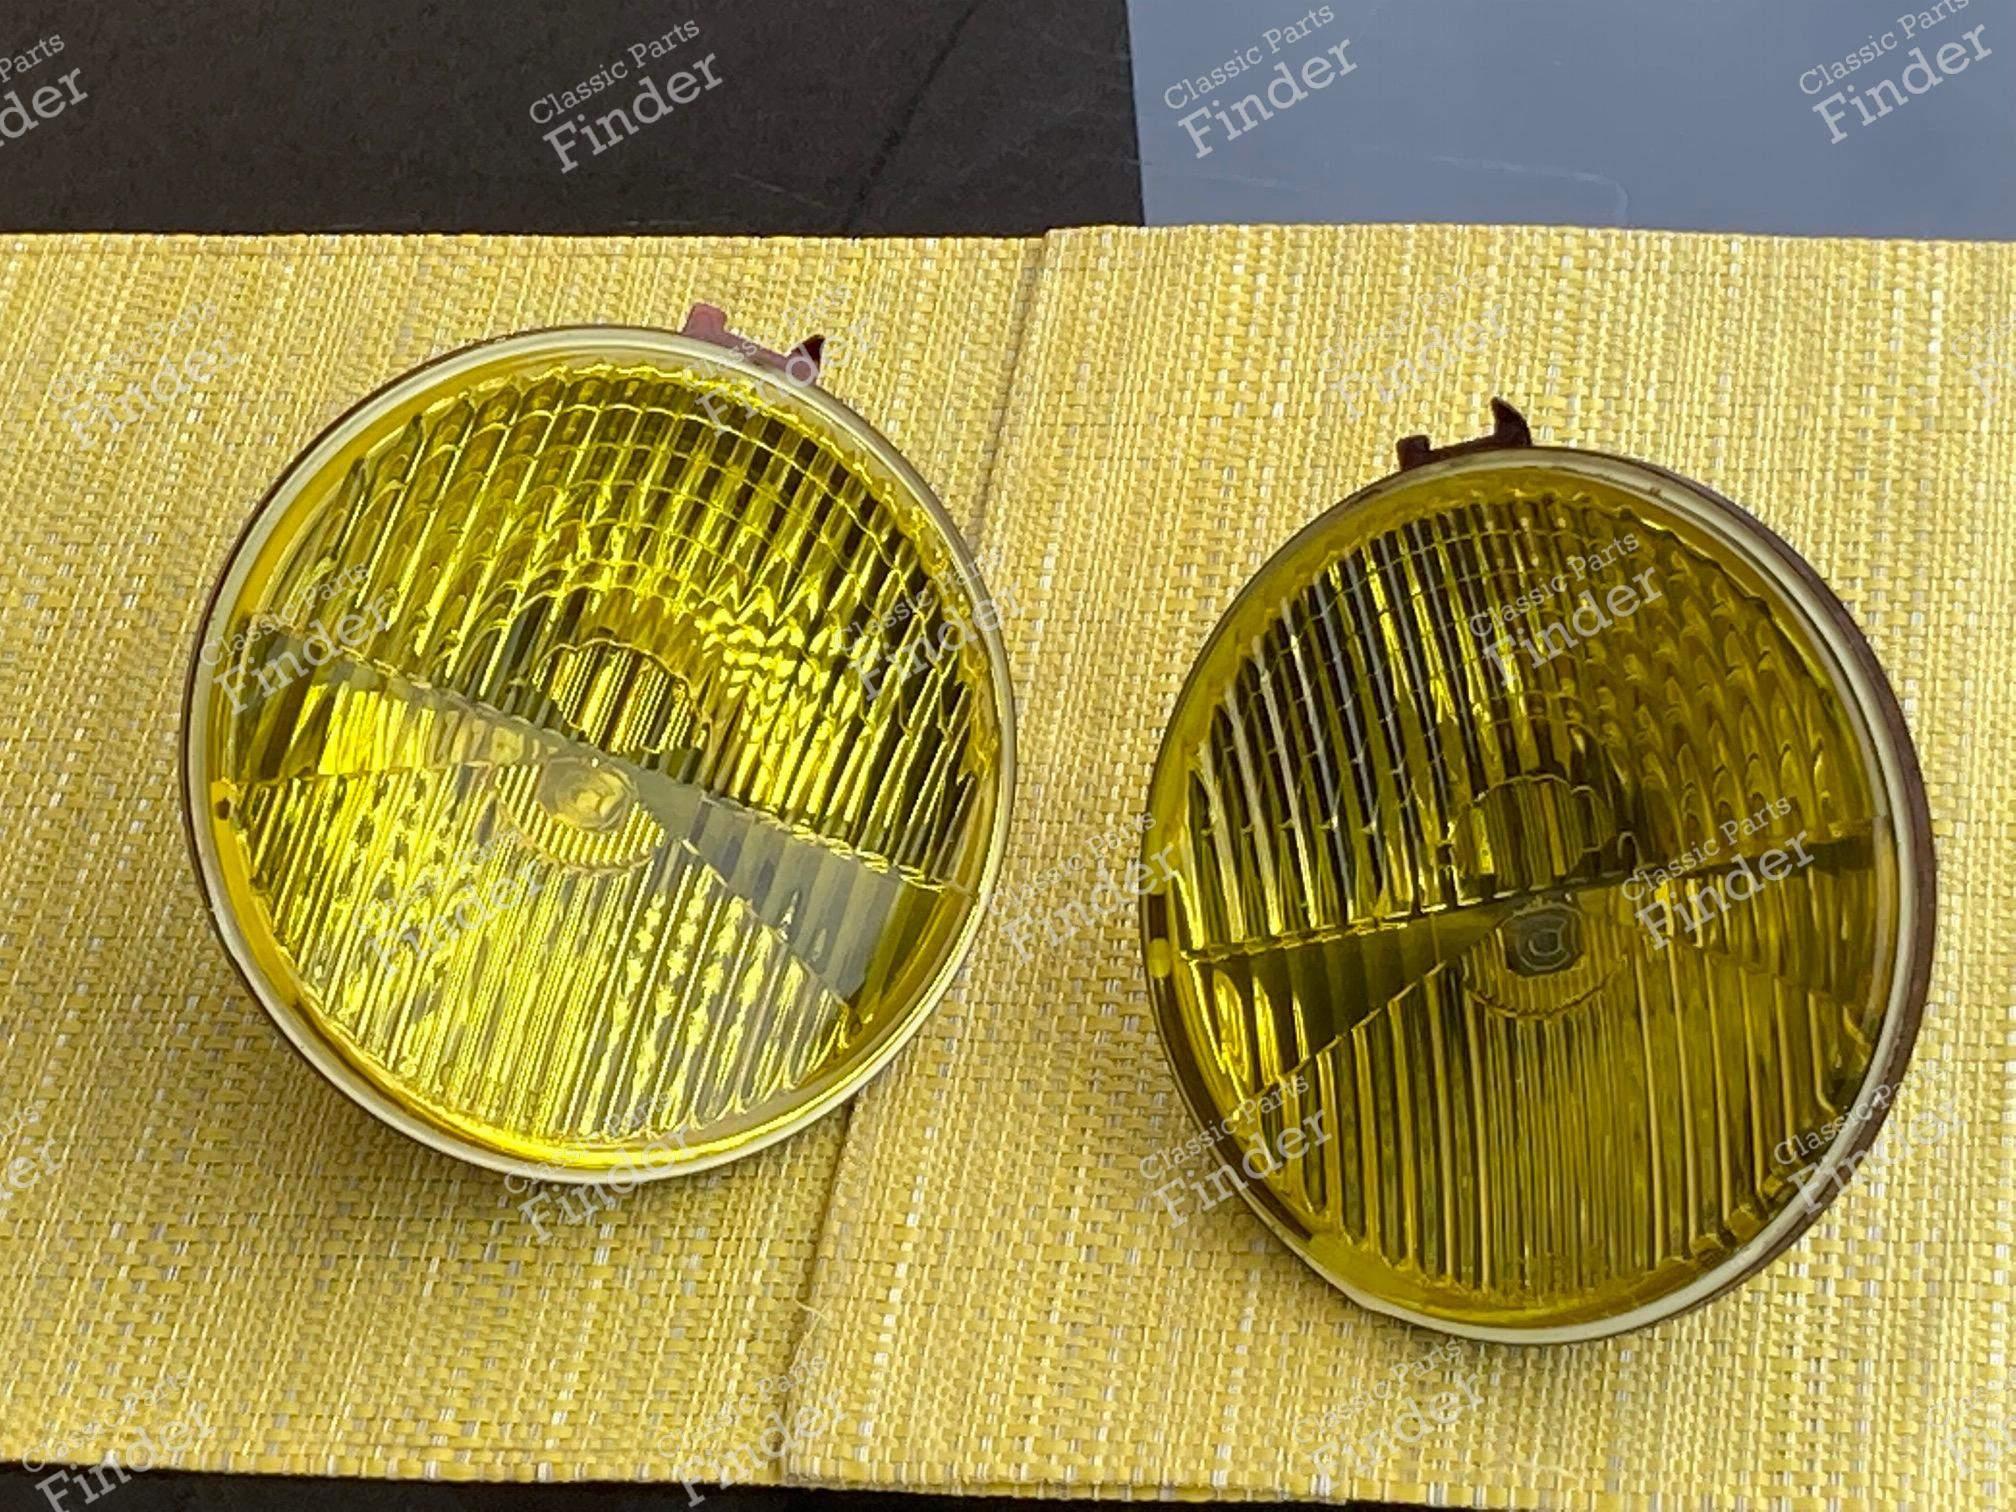 2 Yellow Fog lamps for Oscar Cibié - ALPINE A110